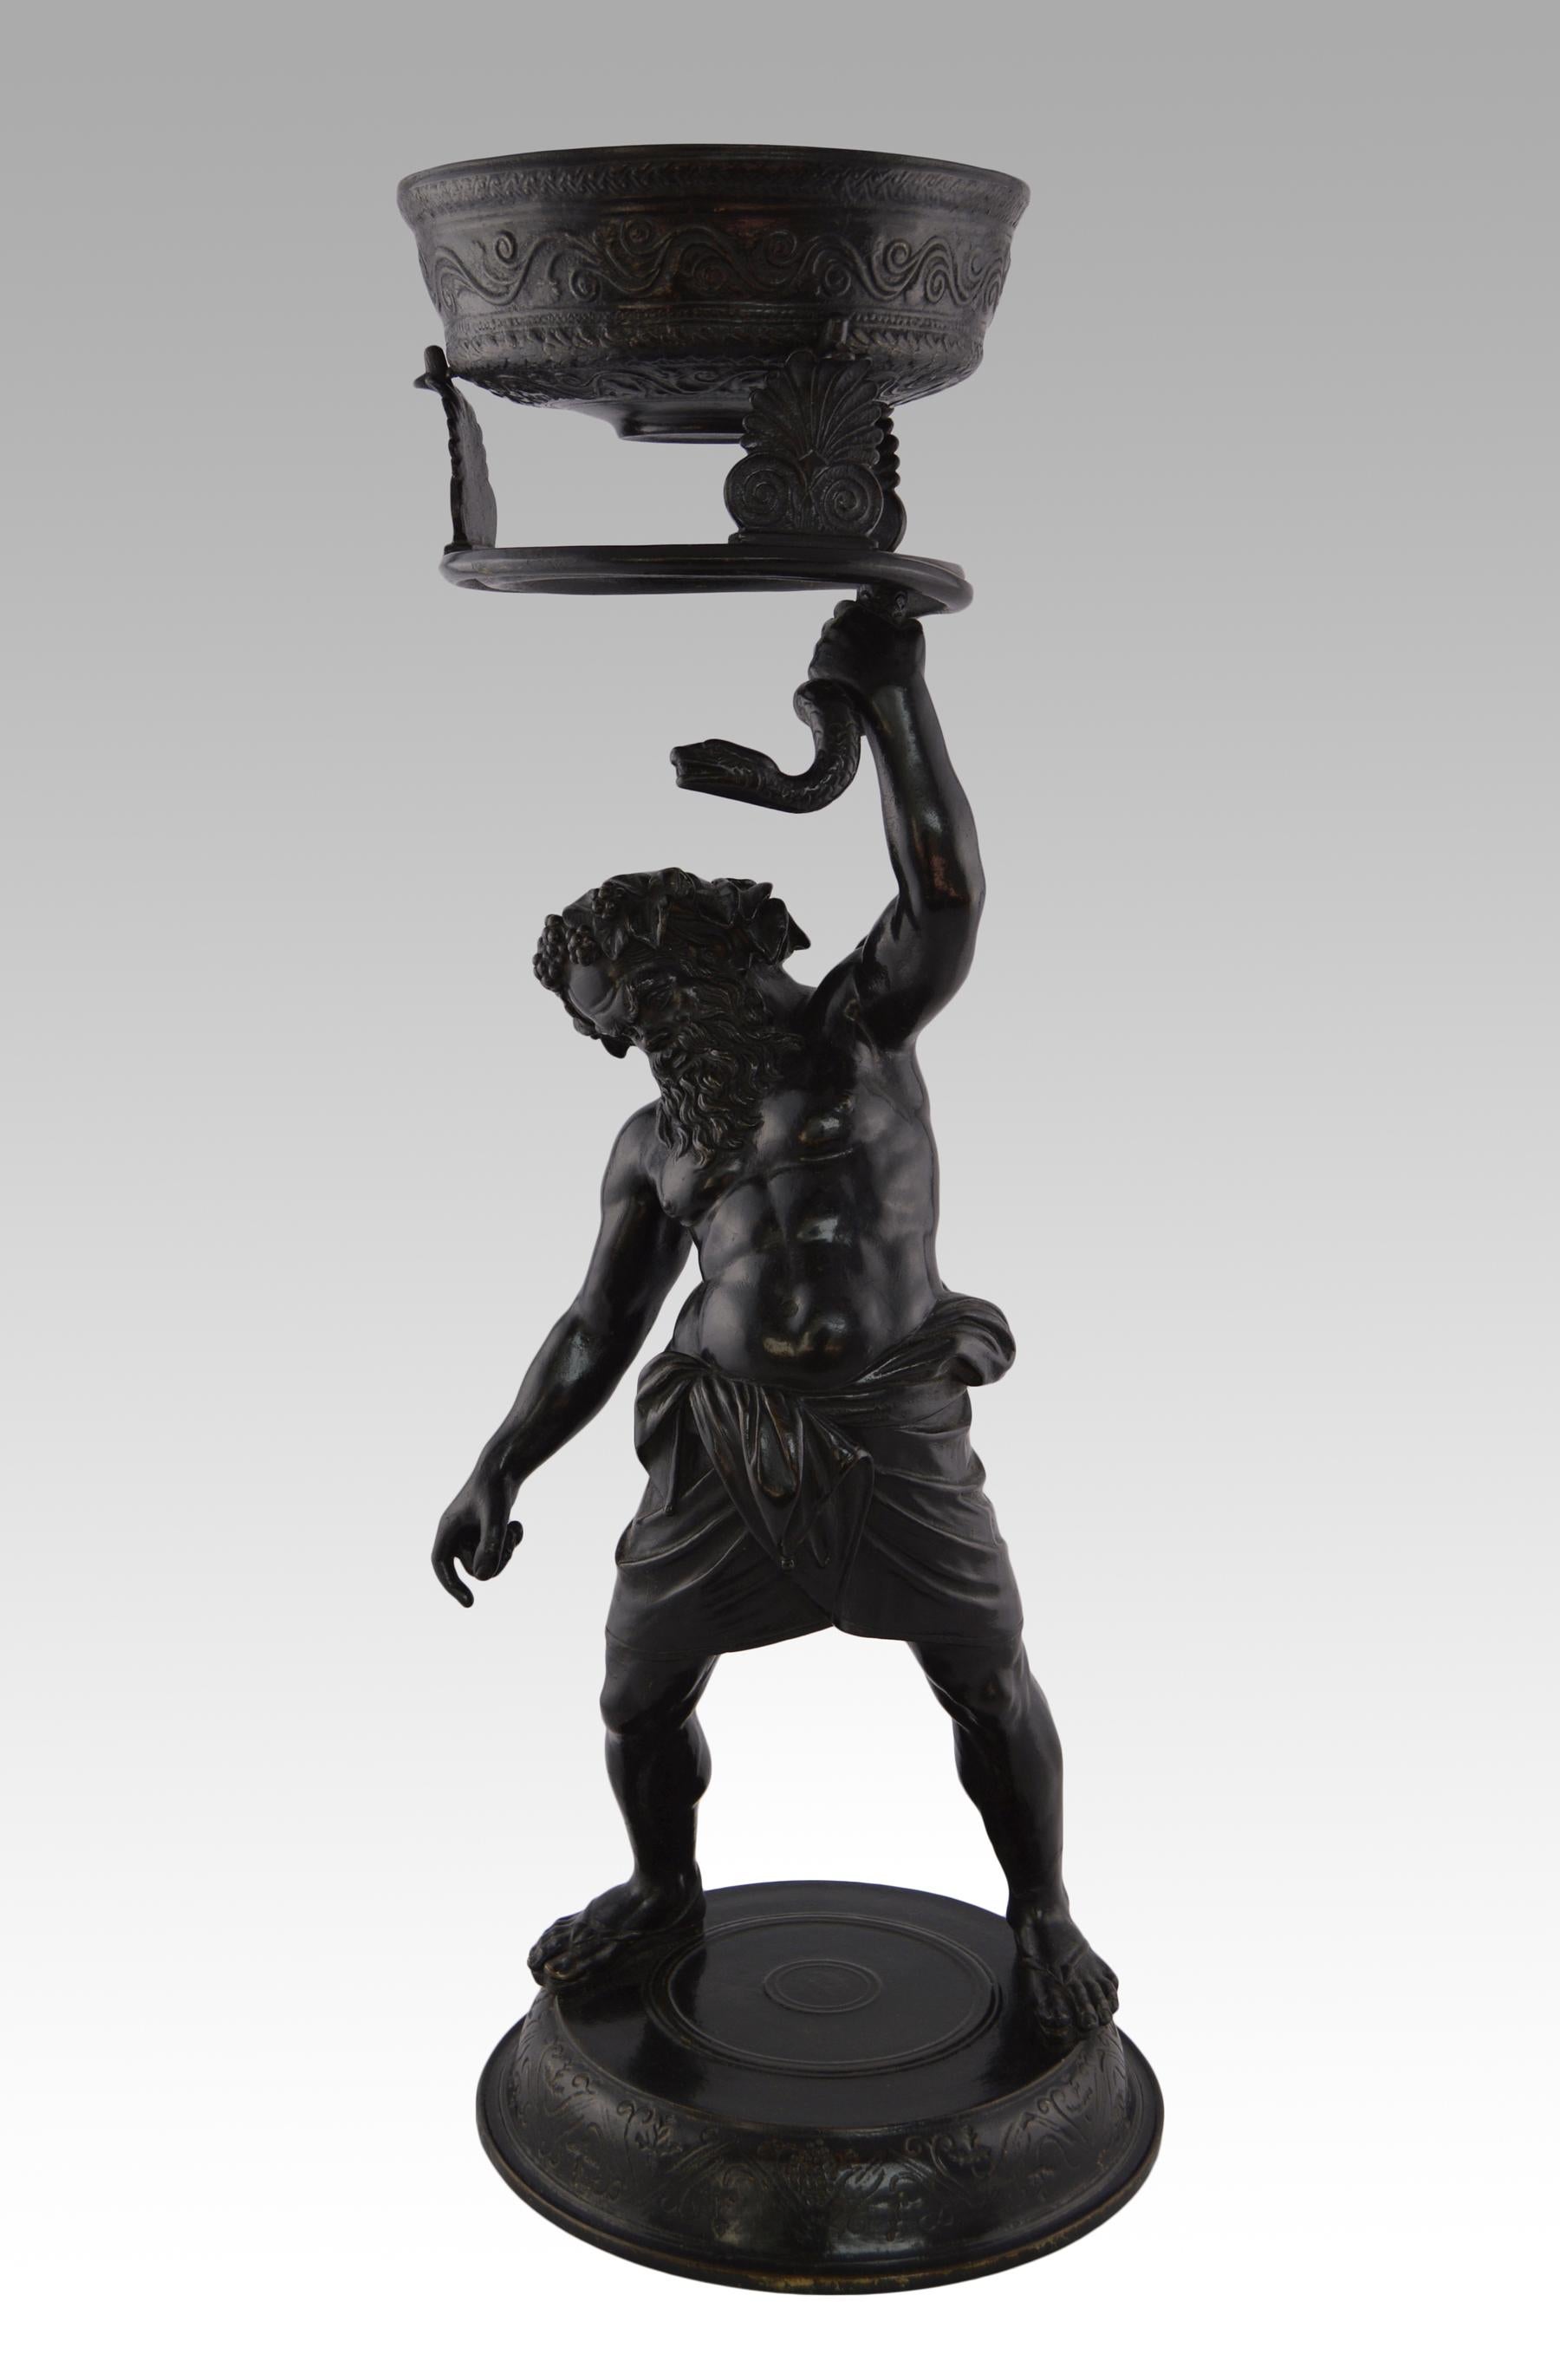 Unknown Figurative Sculpture - 19th Century Italian Grand Tour bronze sculpture of Silenus